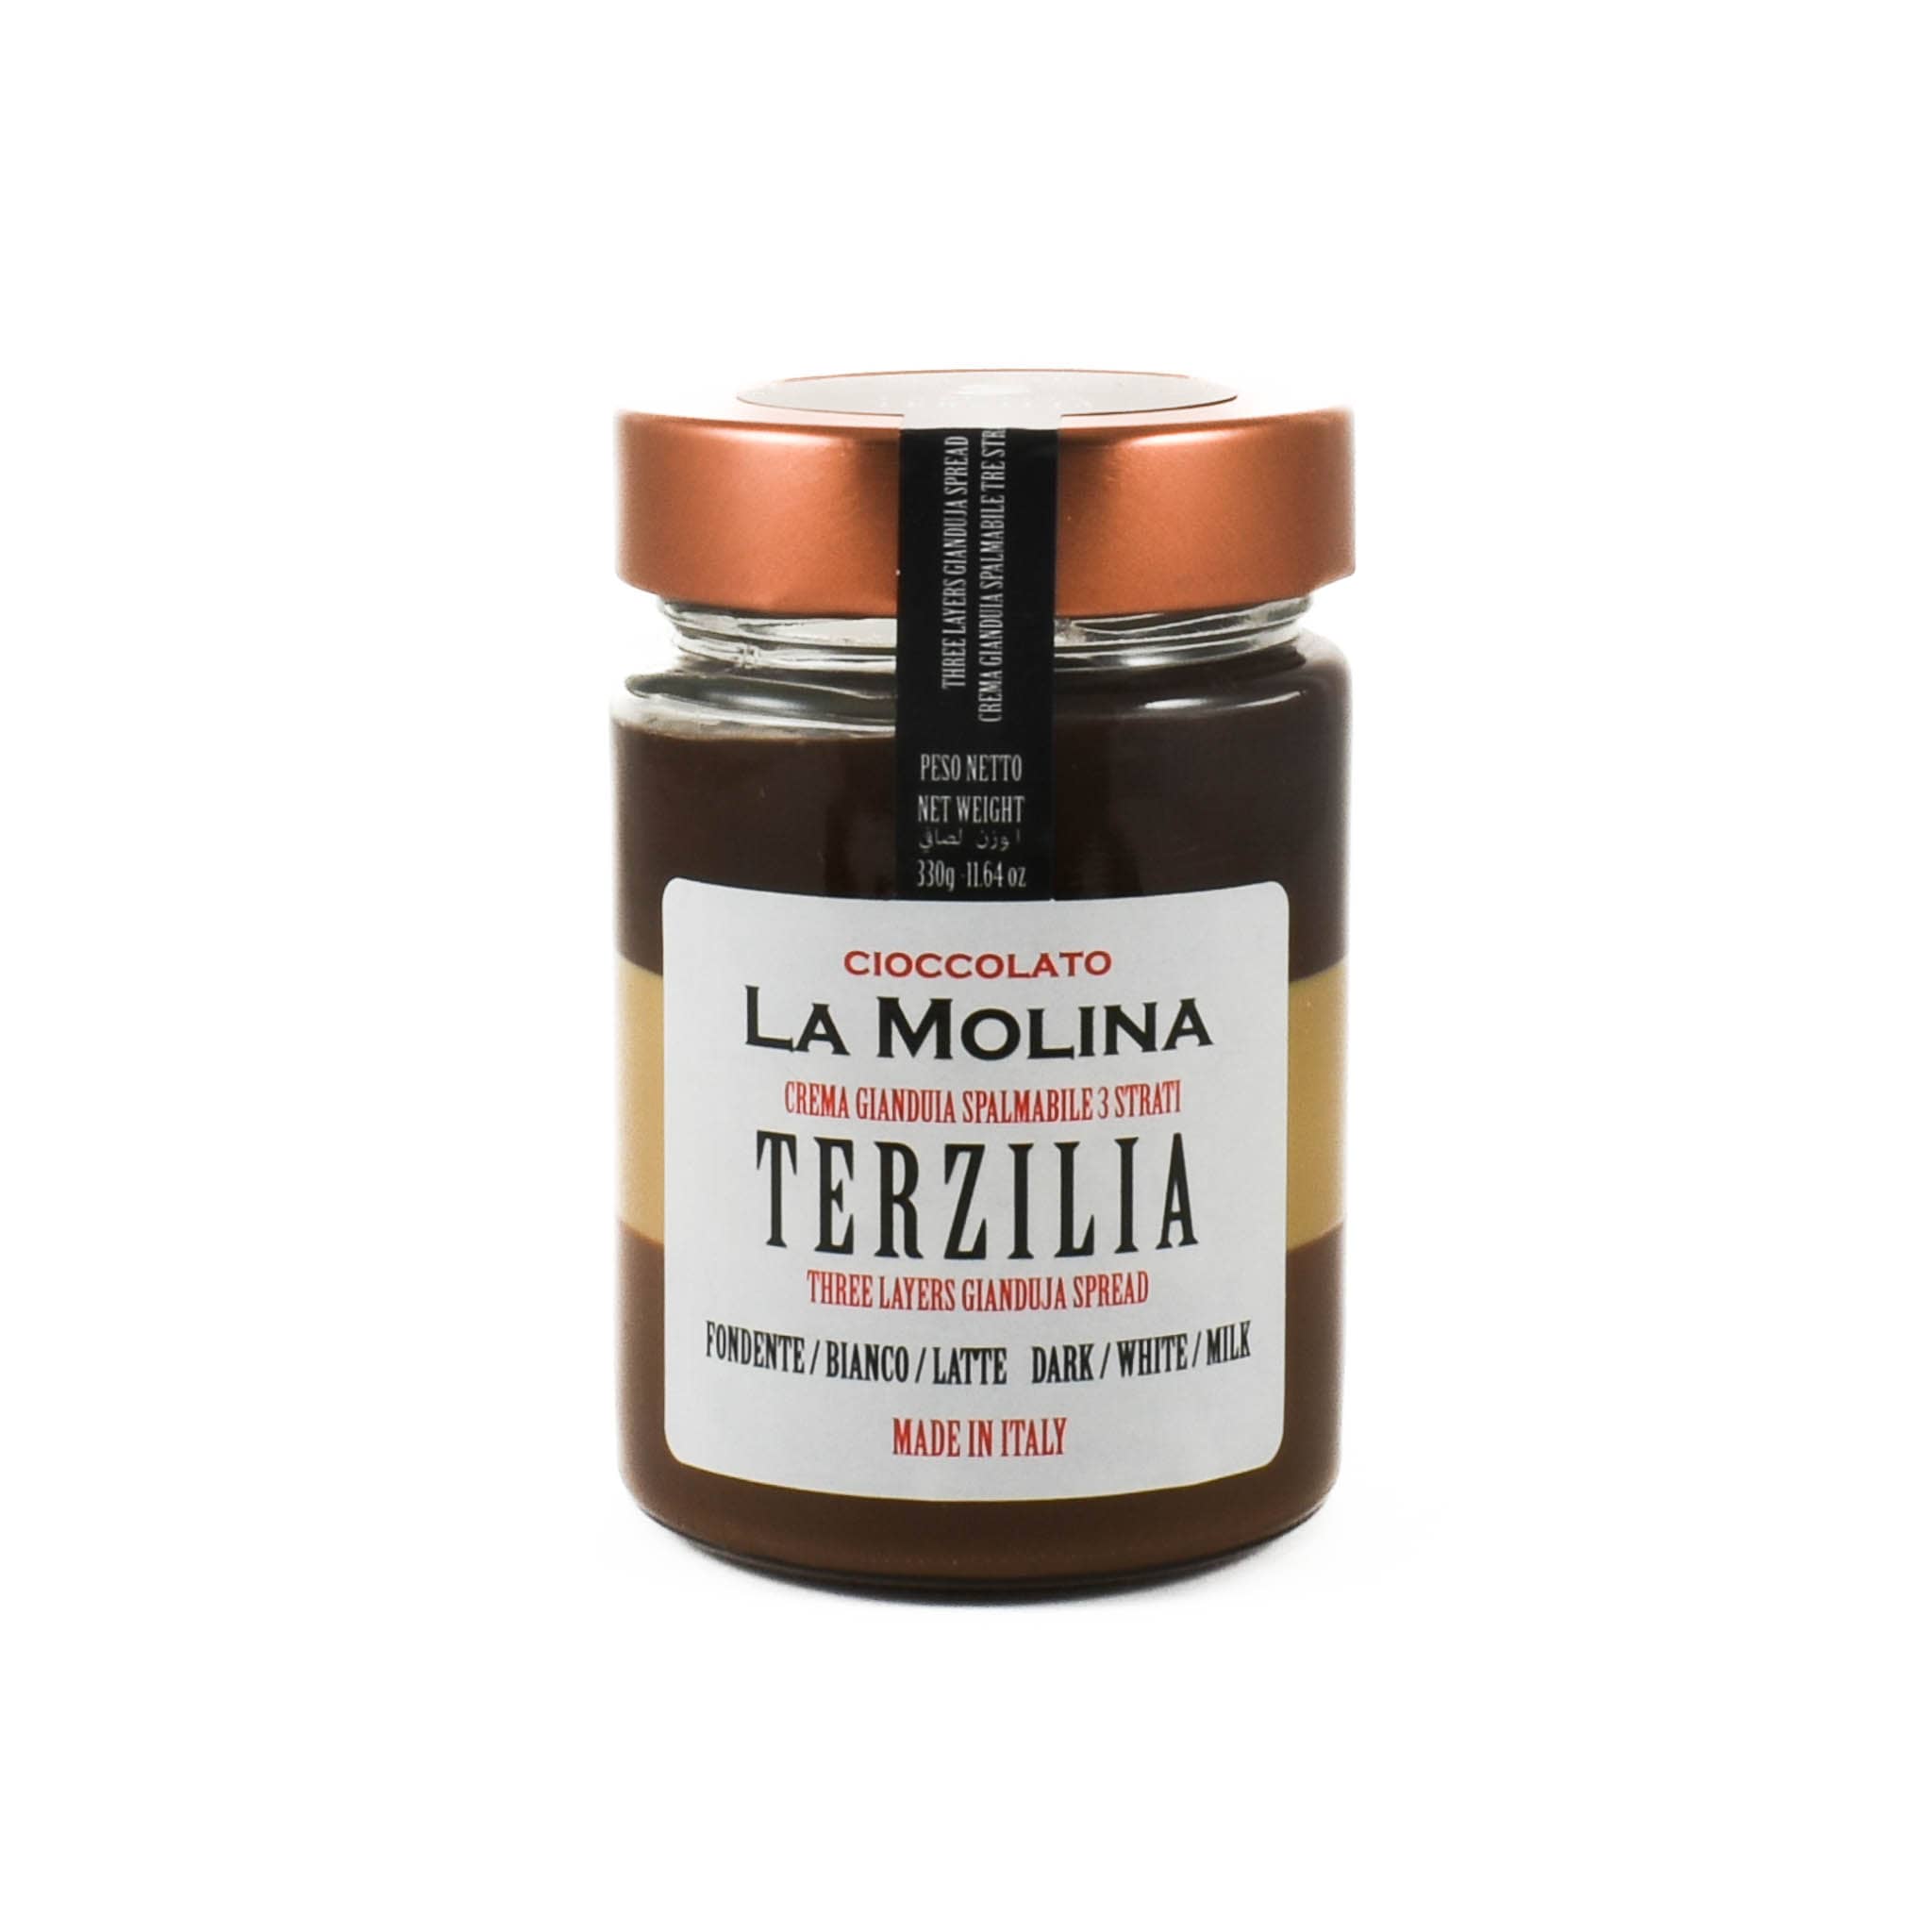 La Molina Terzilia 3 Layers Chocolate Spread 330g